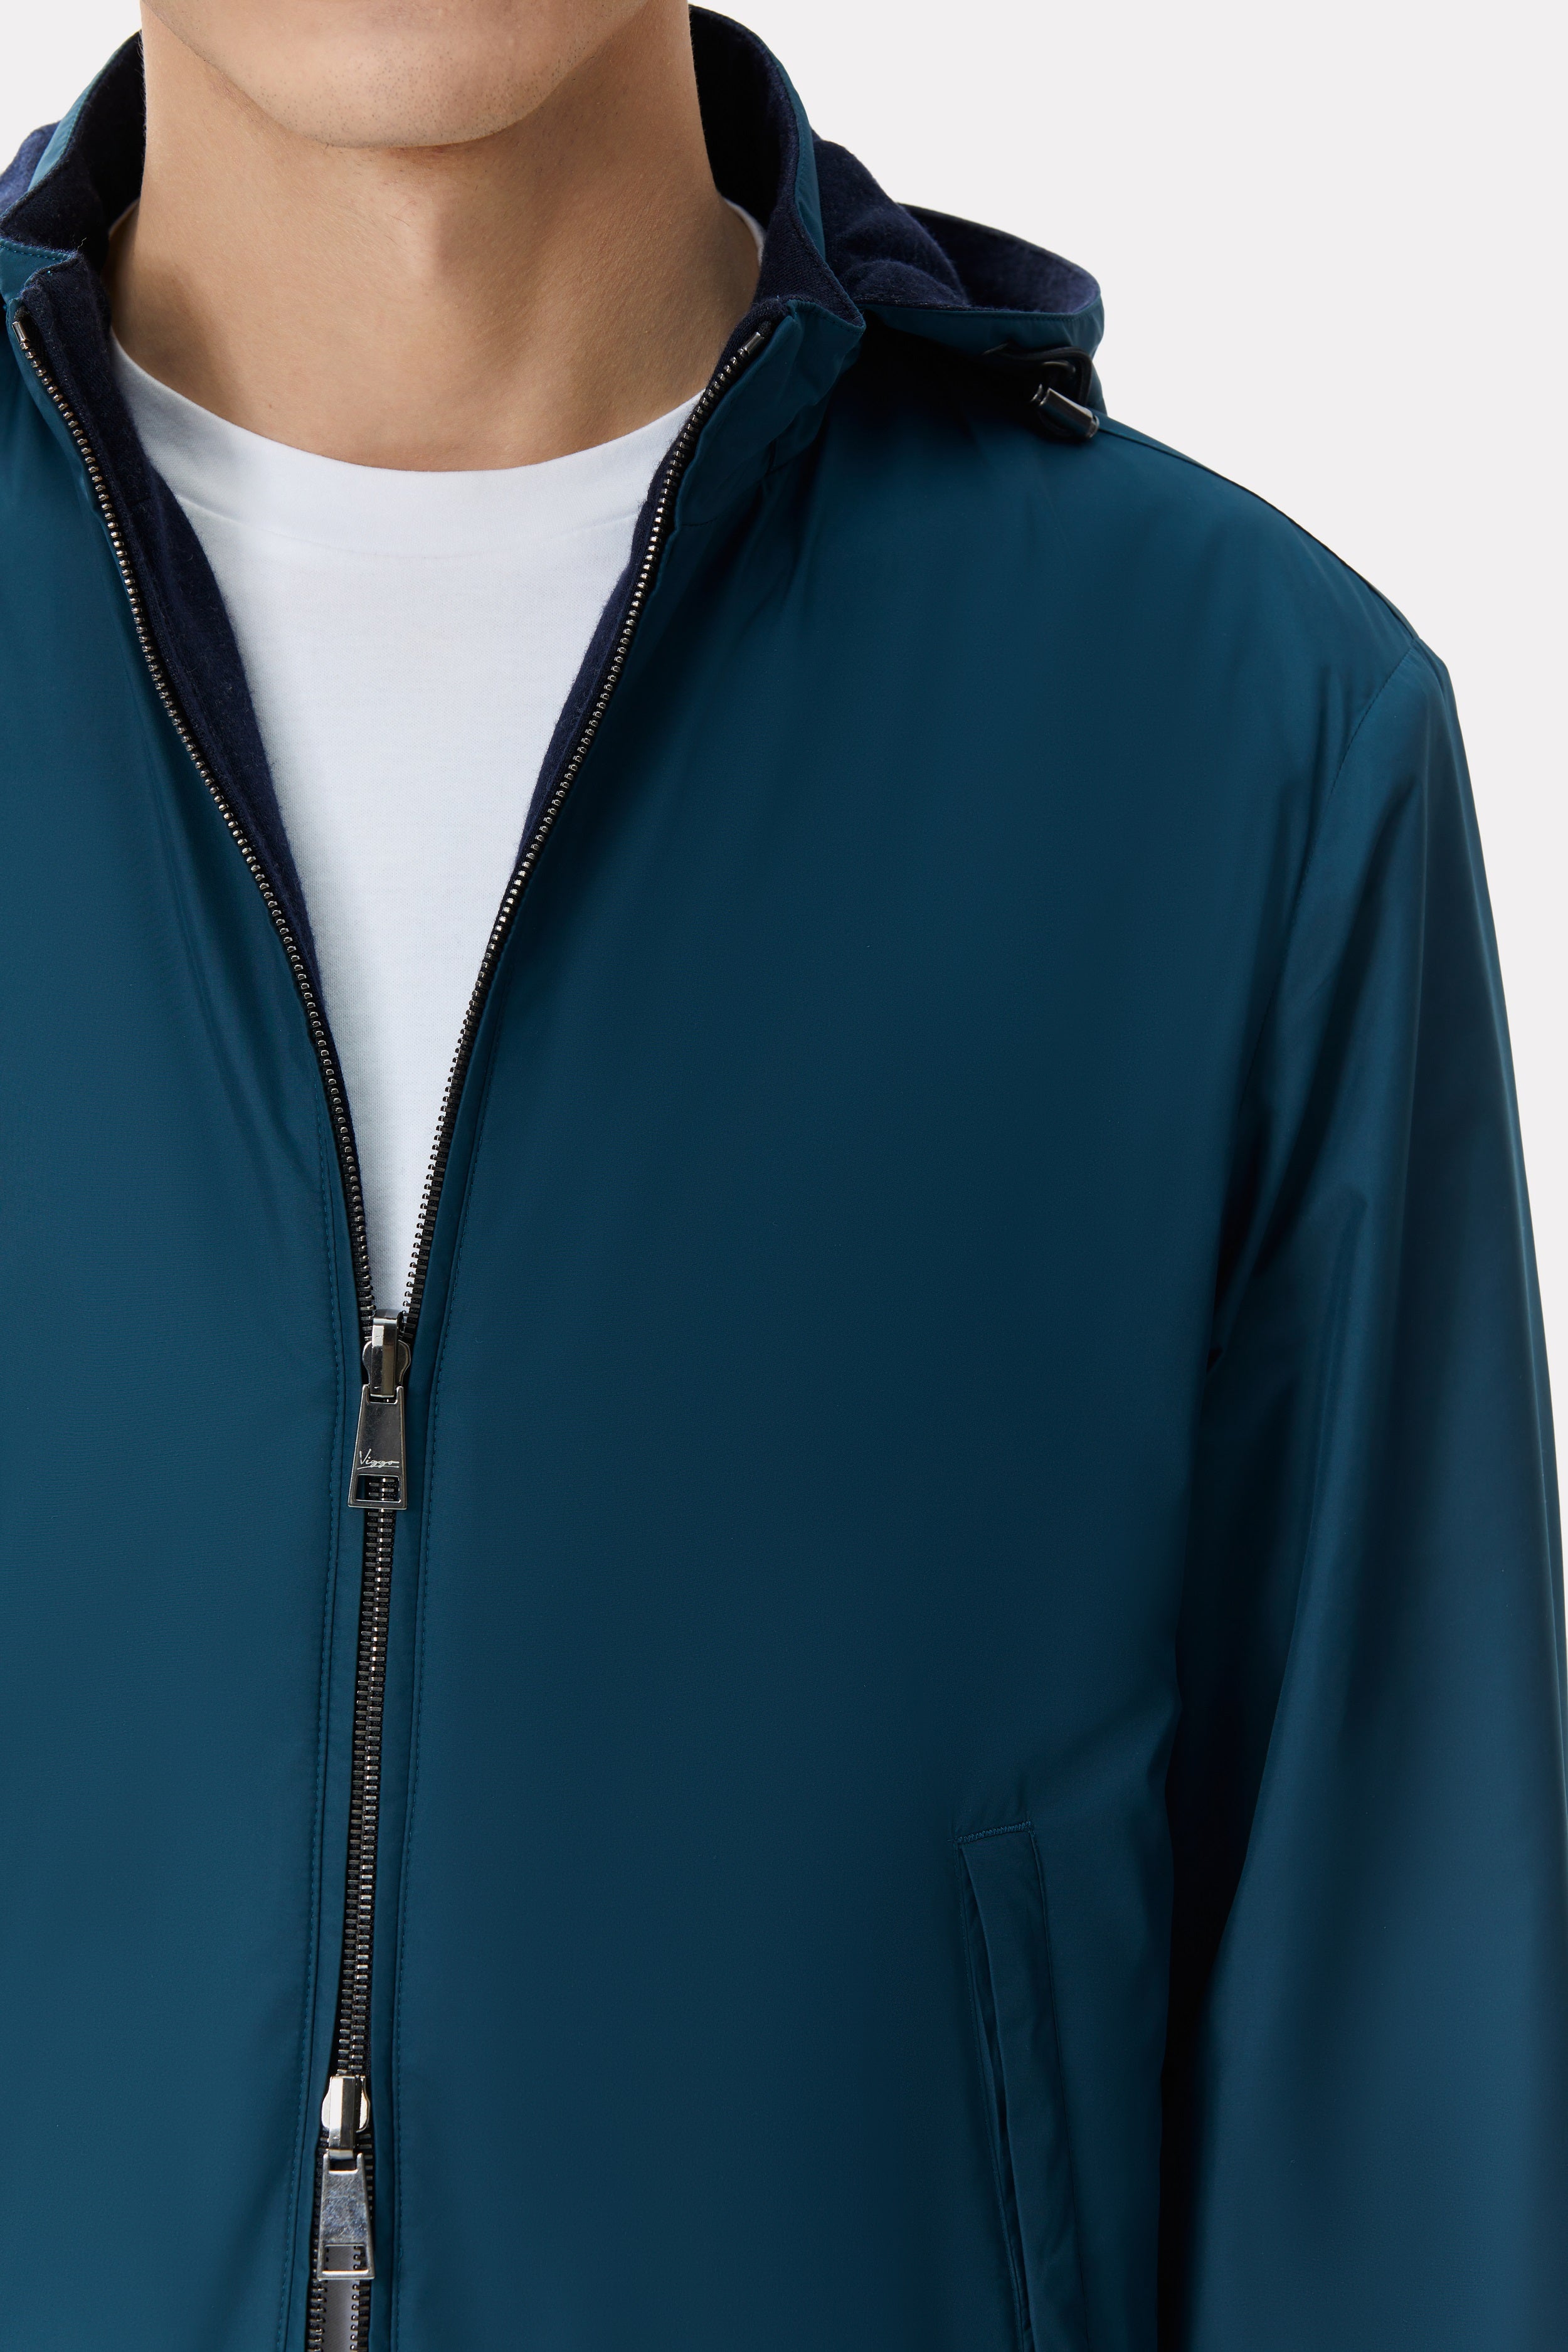 Jacheta reversibila turquoise inchis/navy din material tehno si lana